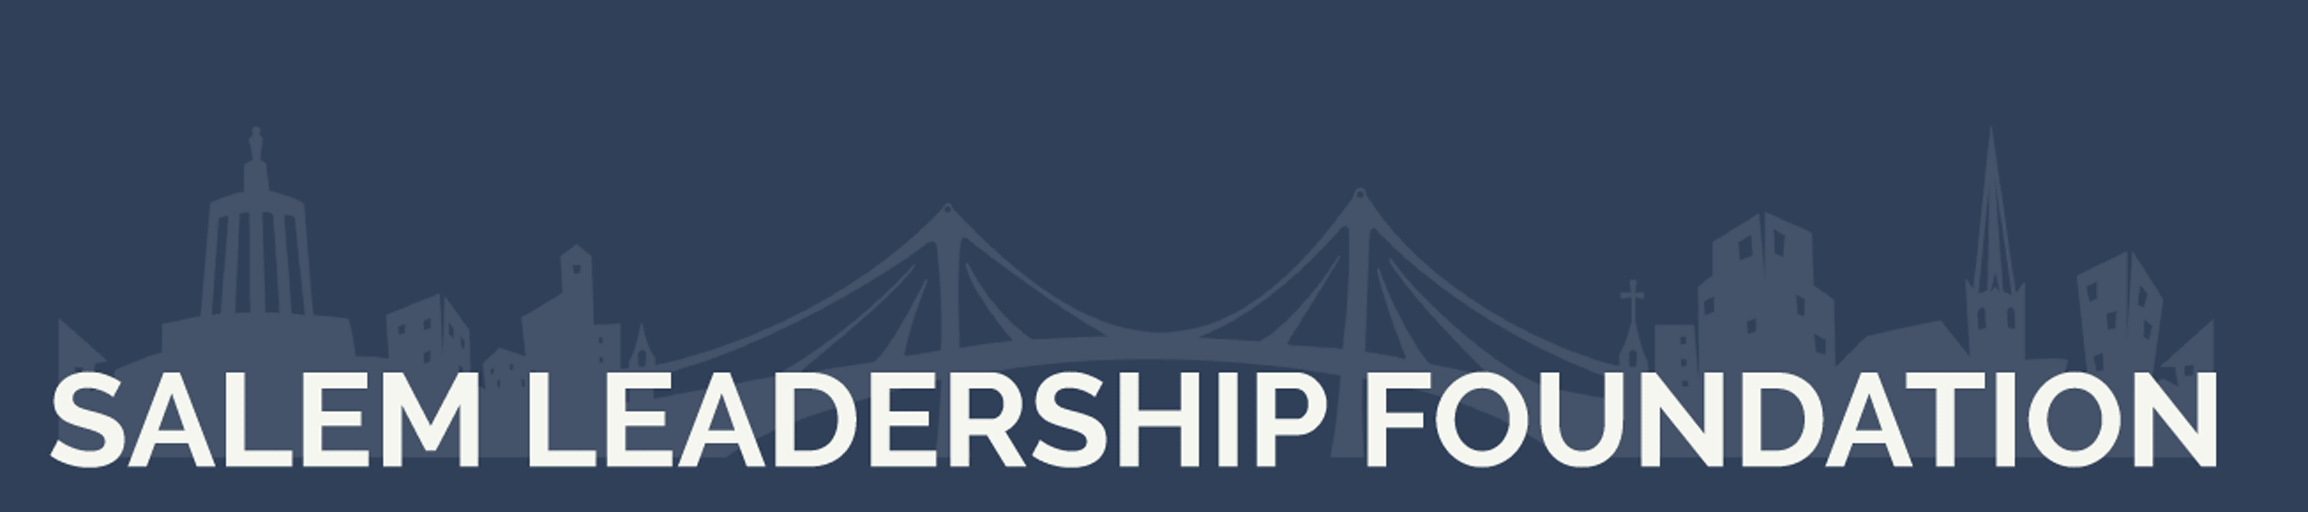 Salem Leadership Foundation